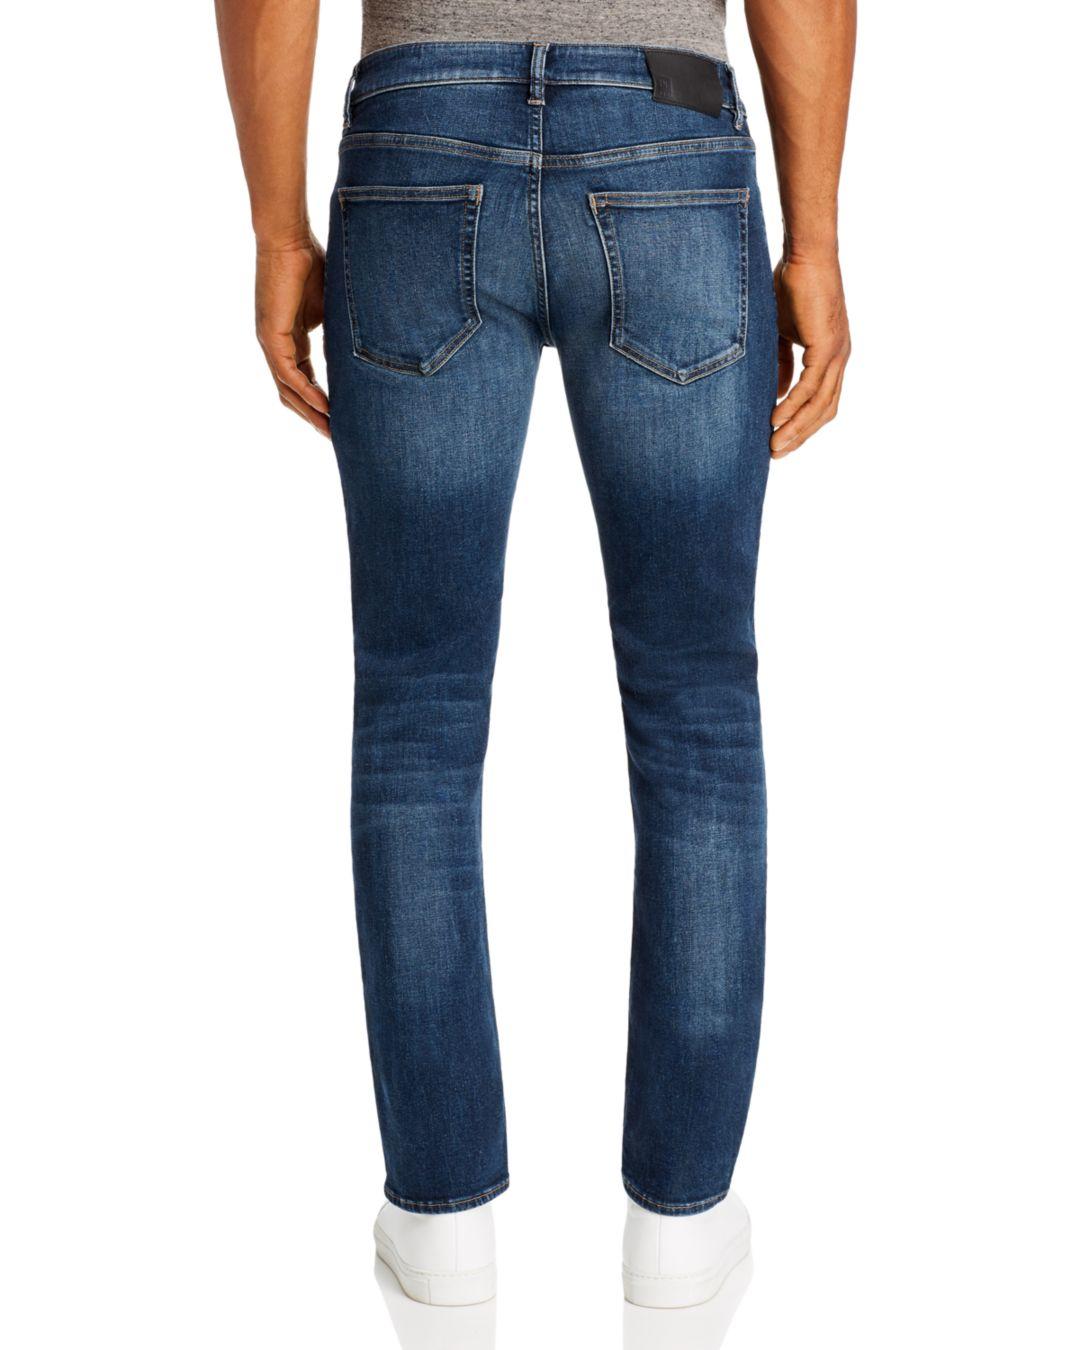 DL1961 Denim Nick Slim Fit Jeans In Weston in Blue for Men - Lyst